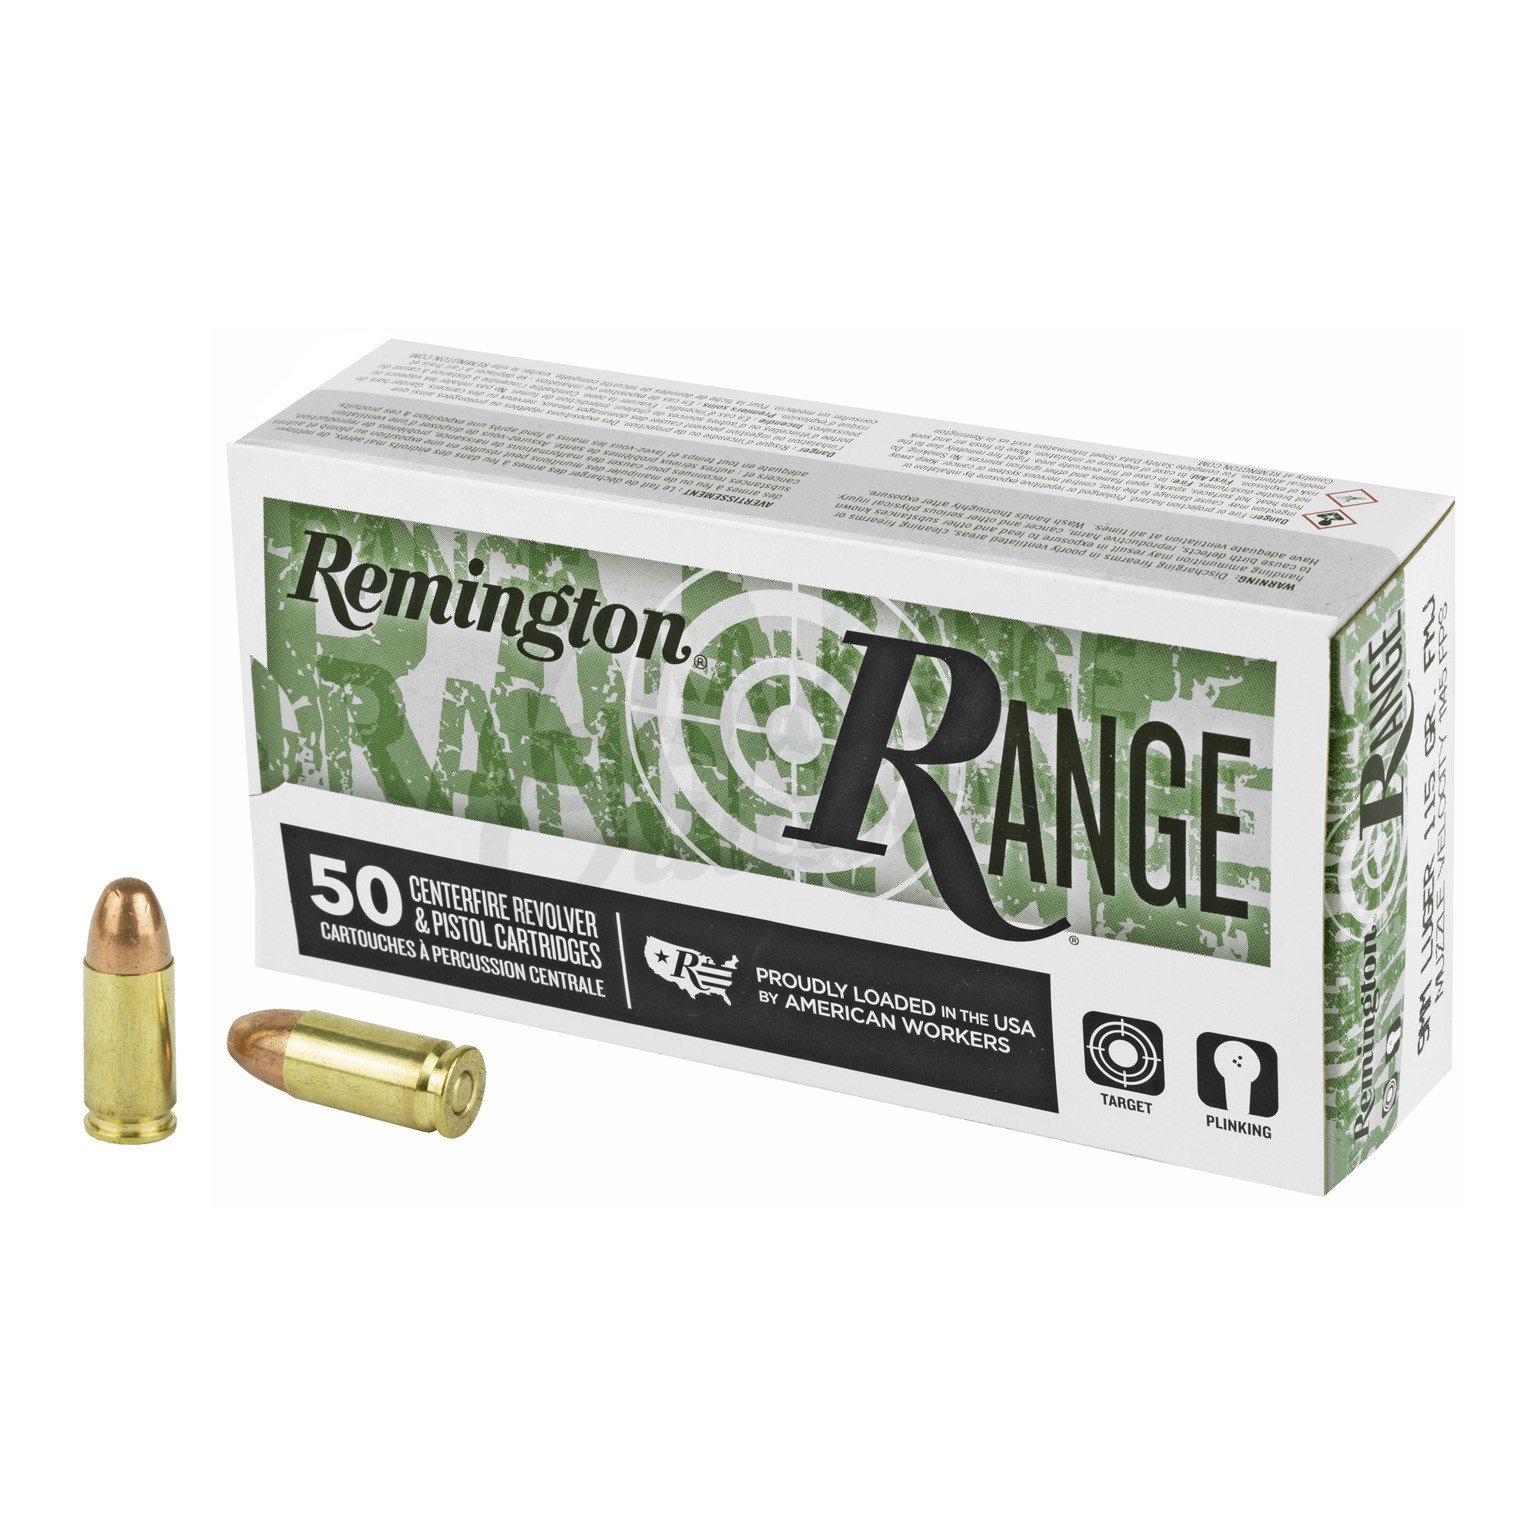 Remington Range 9mm 115 Grain Fmj Ammo 50 Round Box Omaha Outdoors